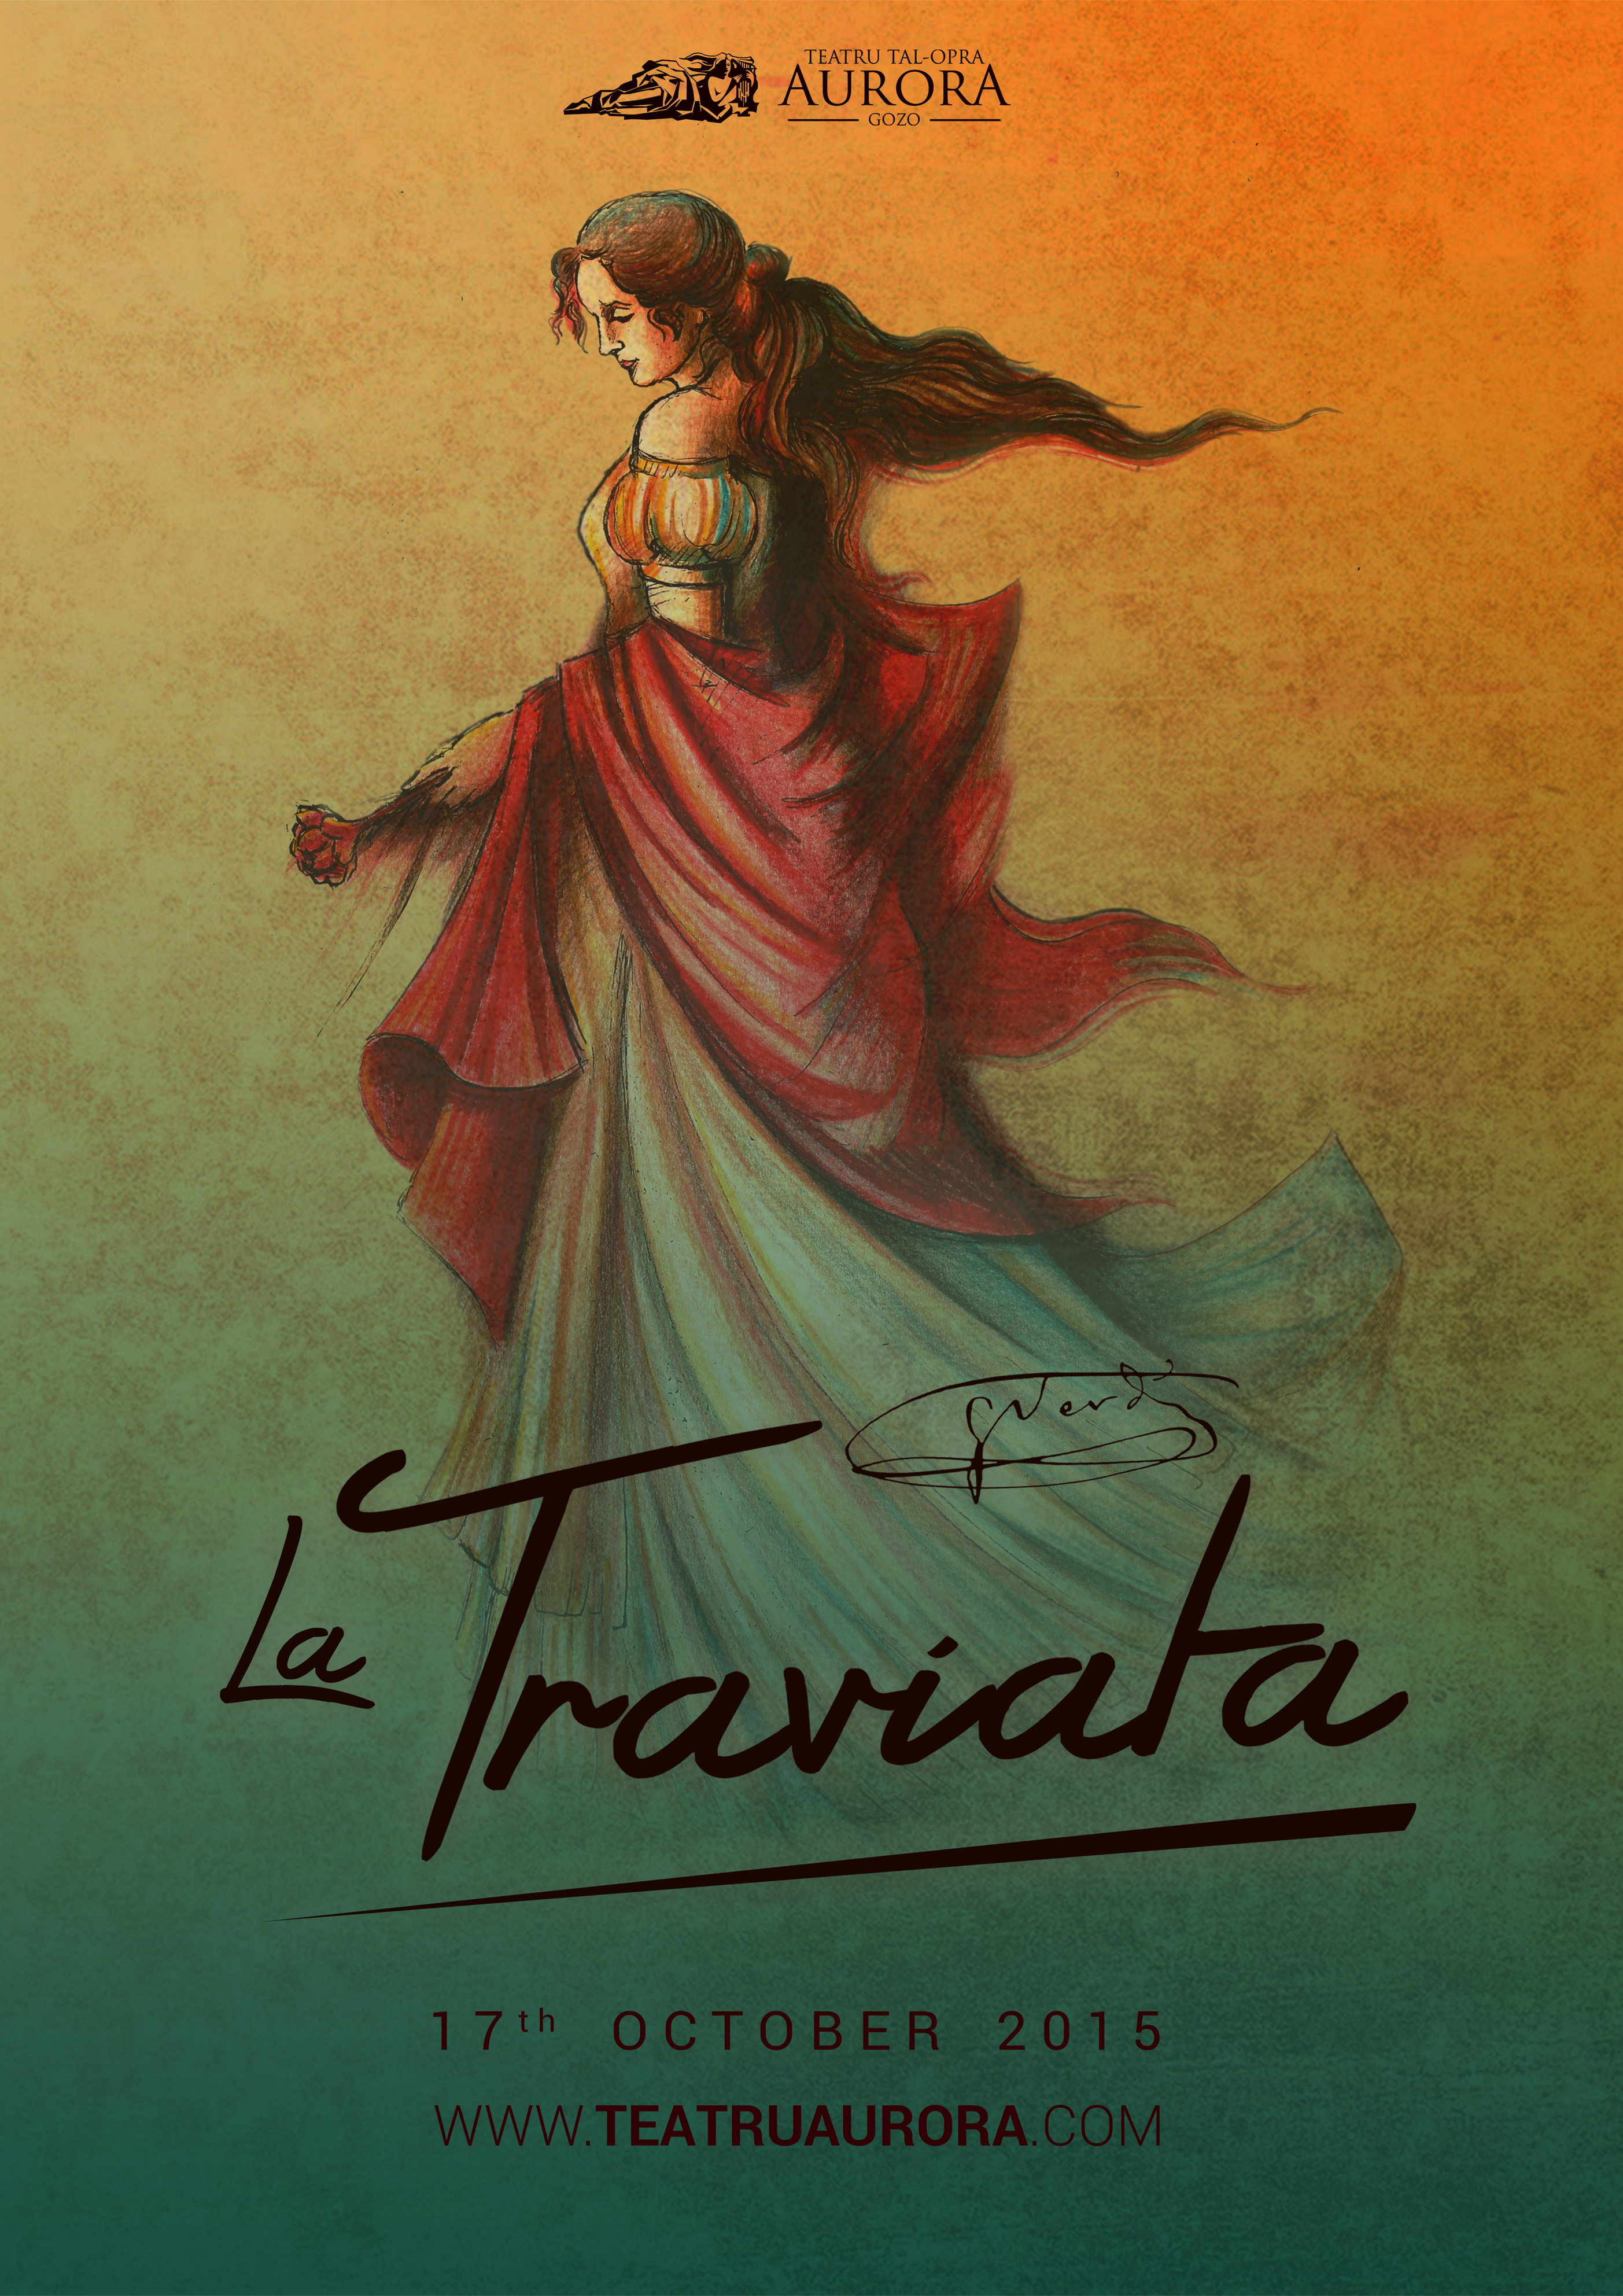 Dessay santa fe traviata